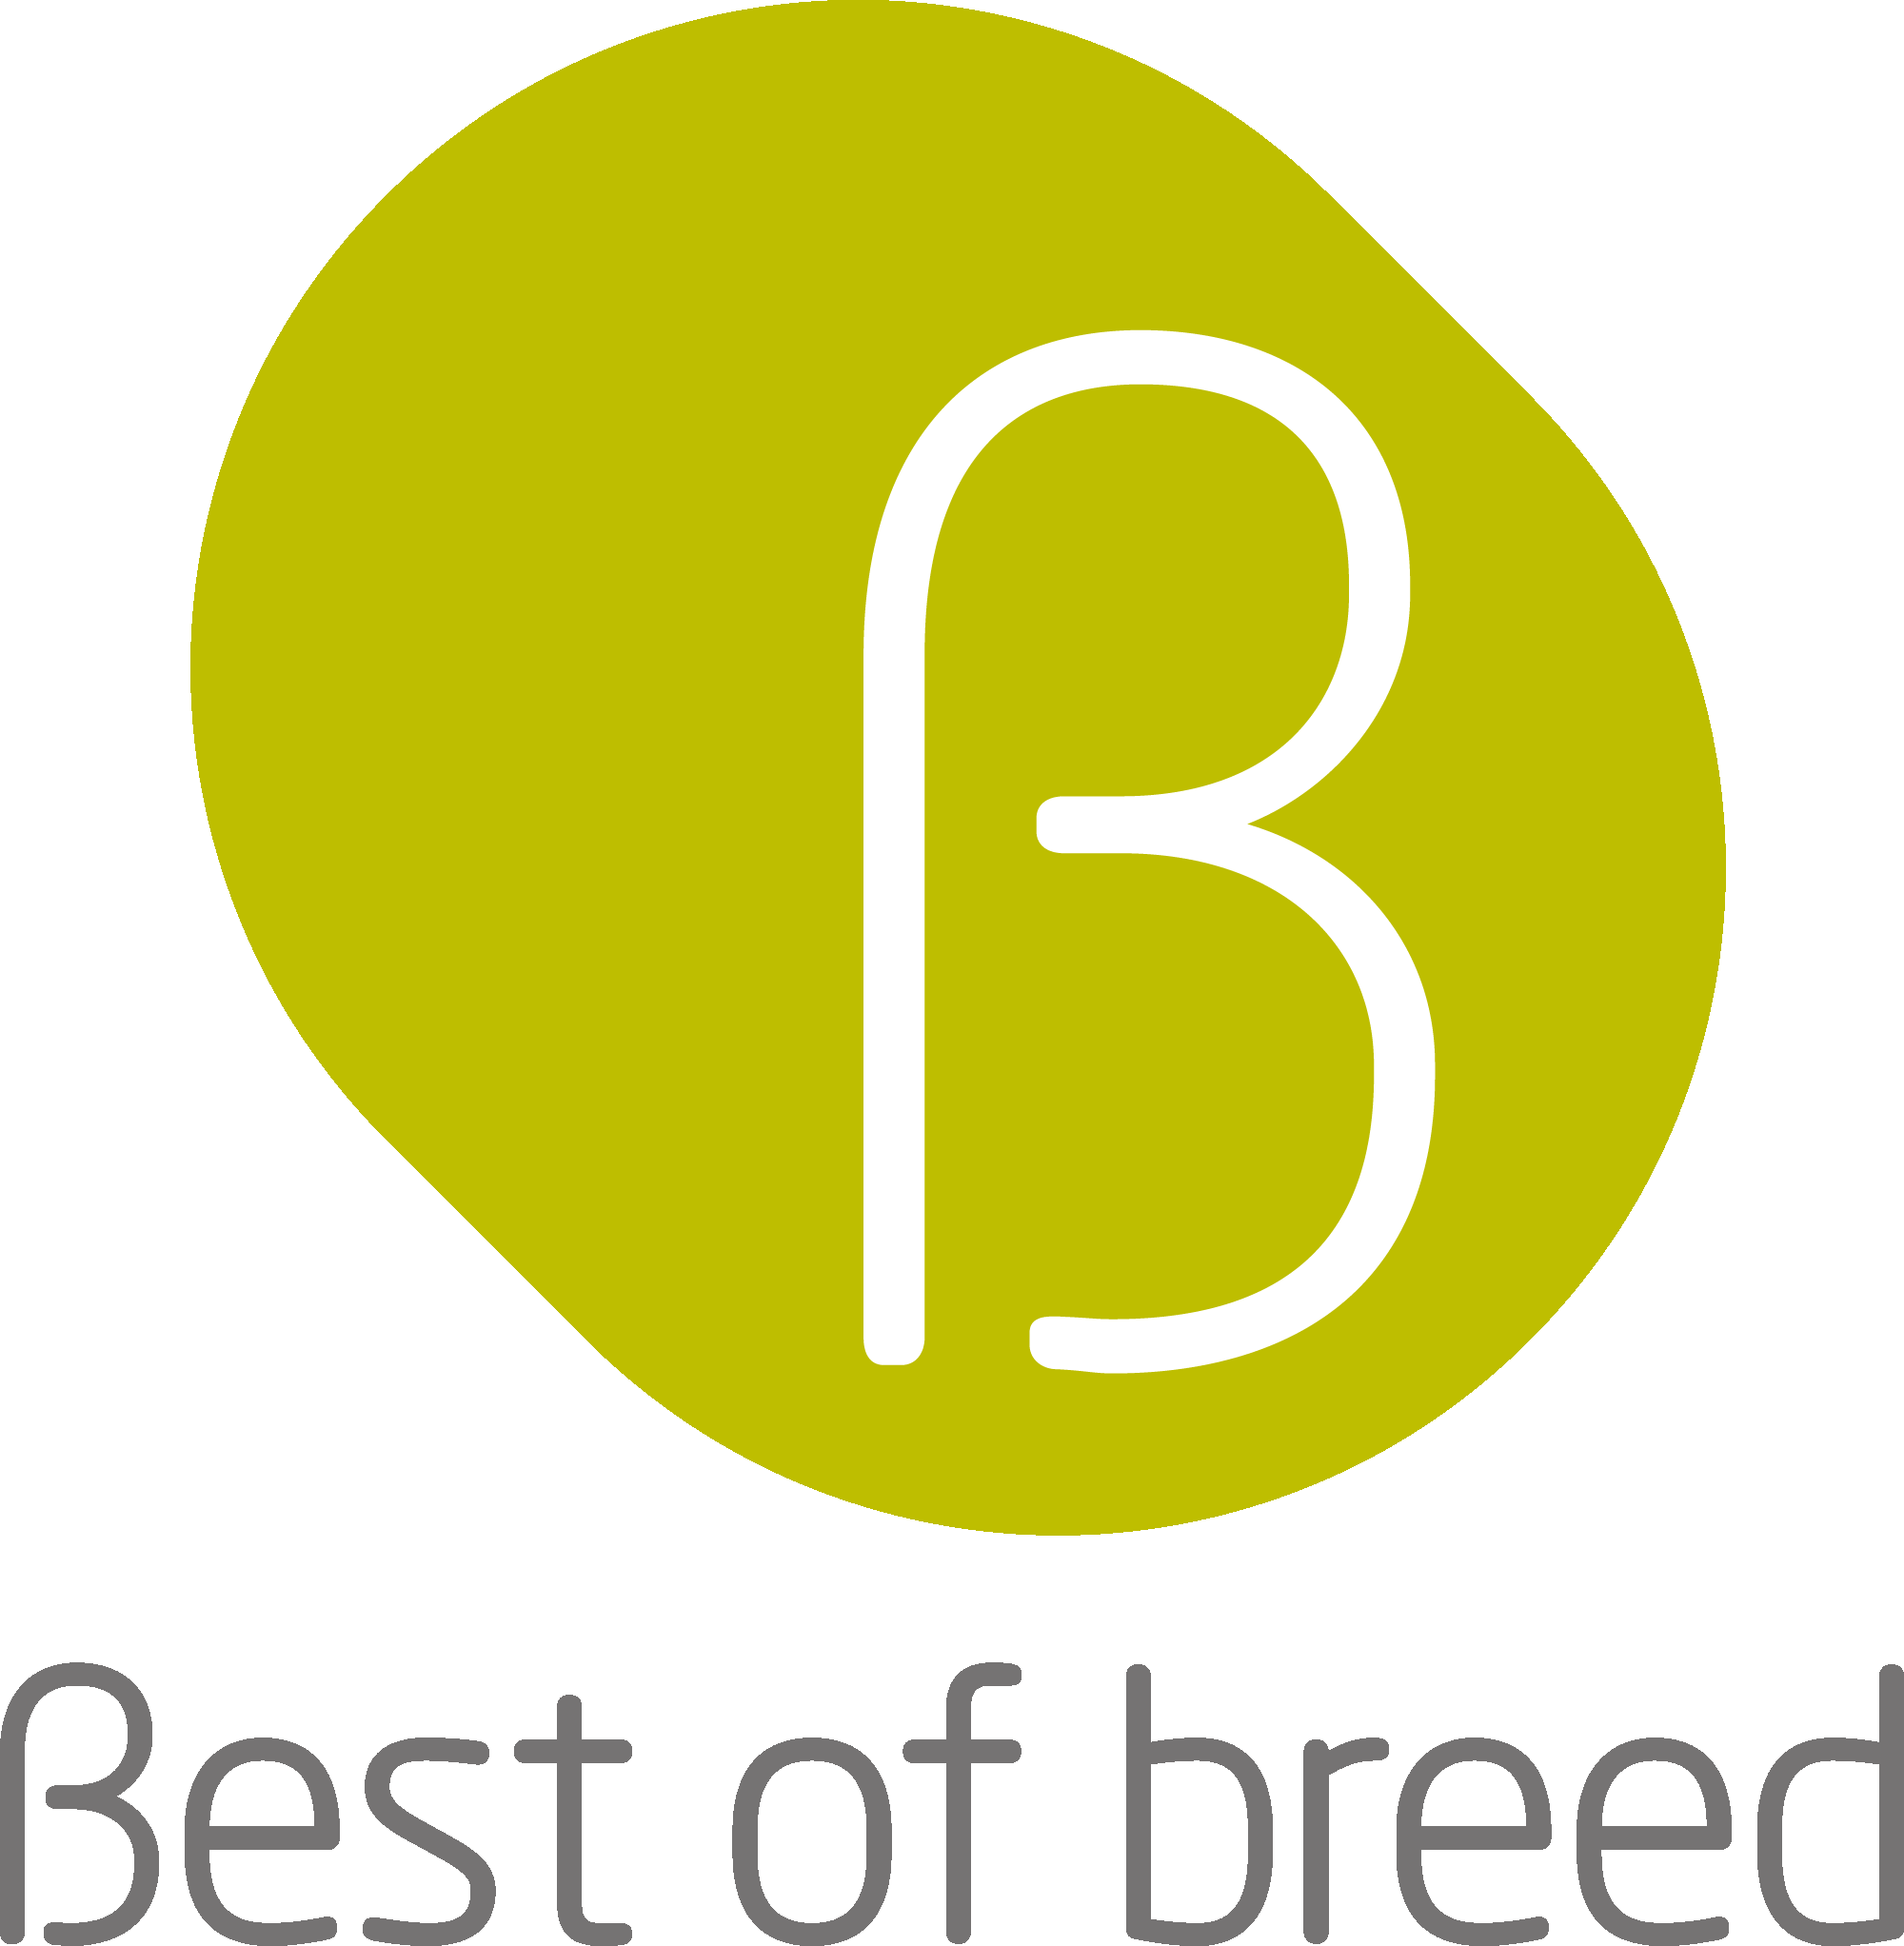 Best of breed